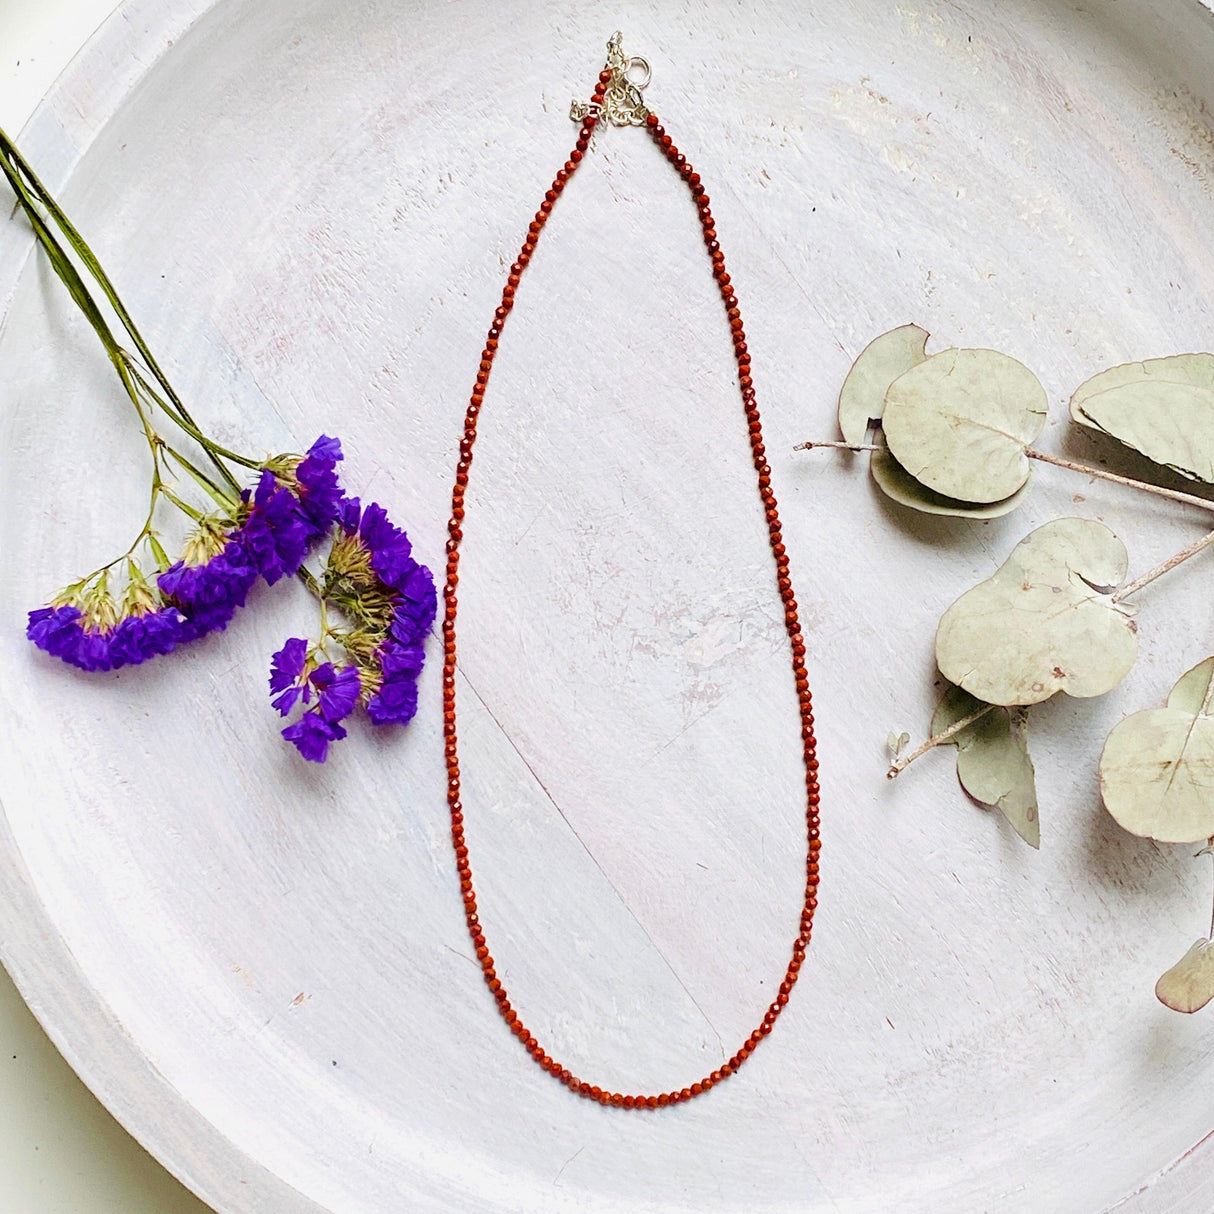 Micro Bead Necklace - Red Jasper - Nature's Magick